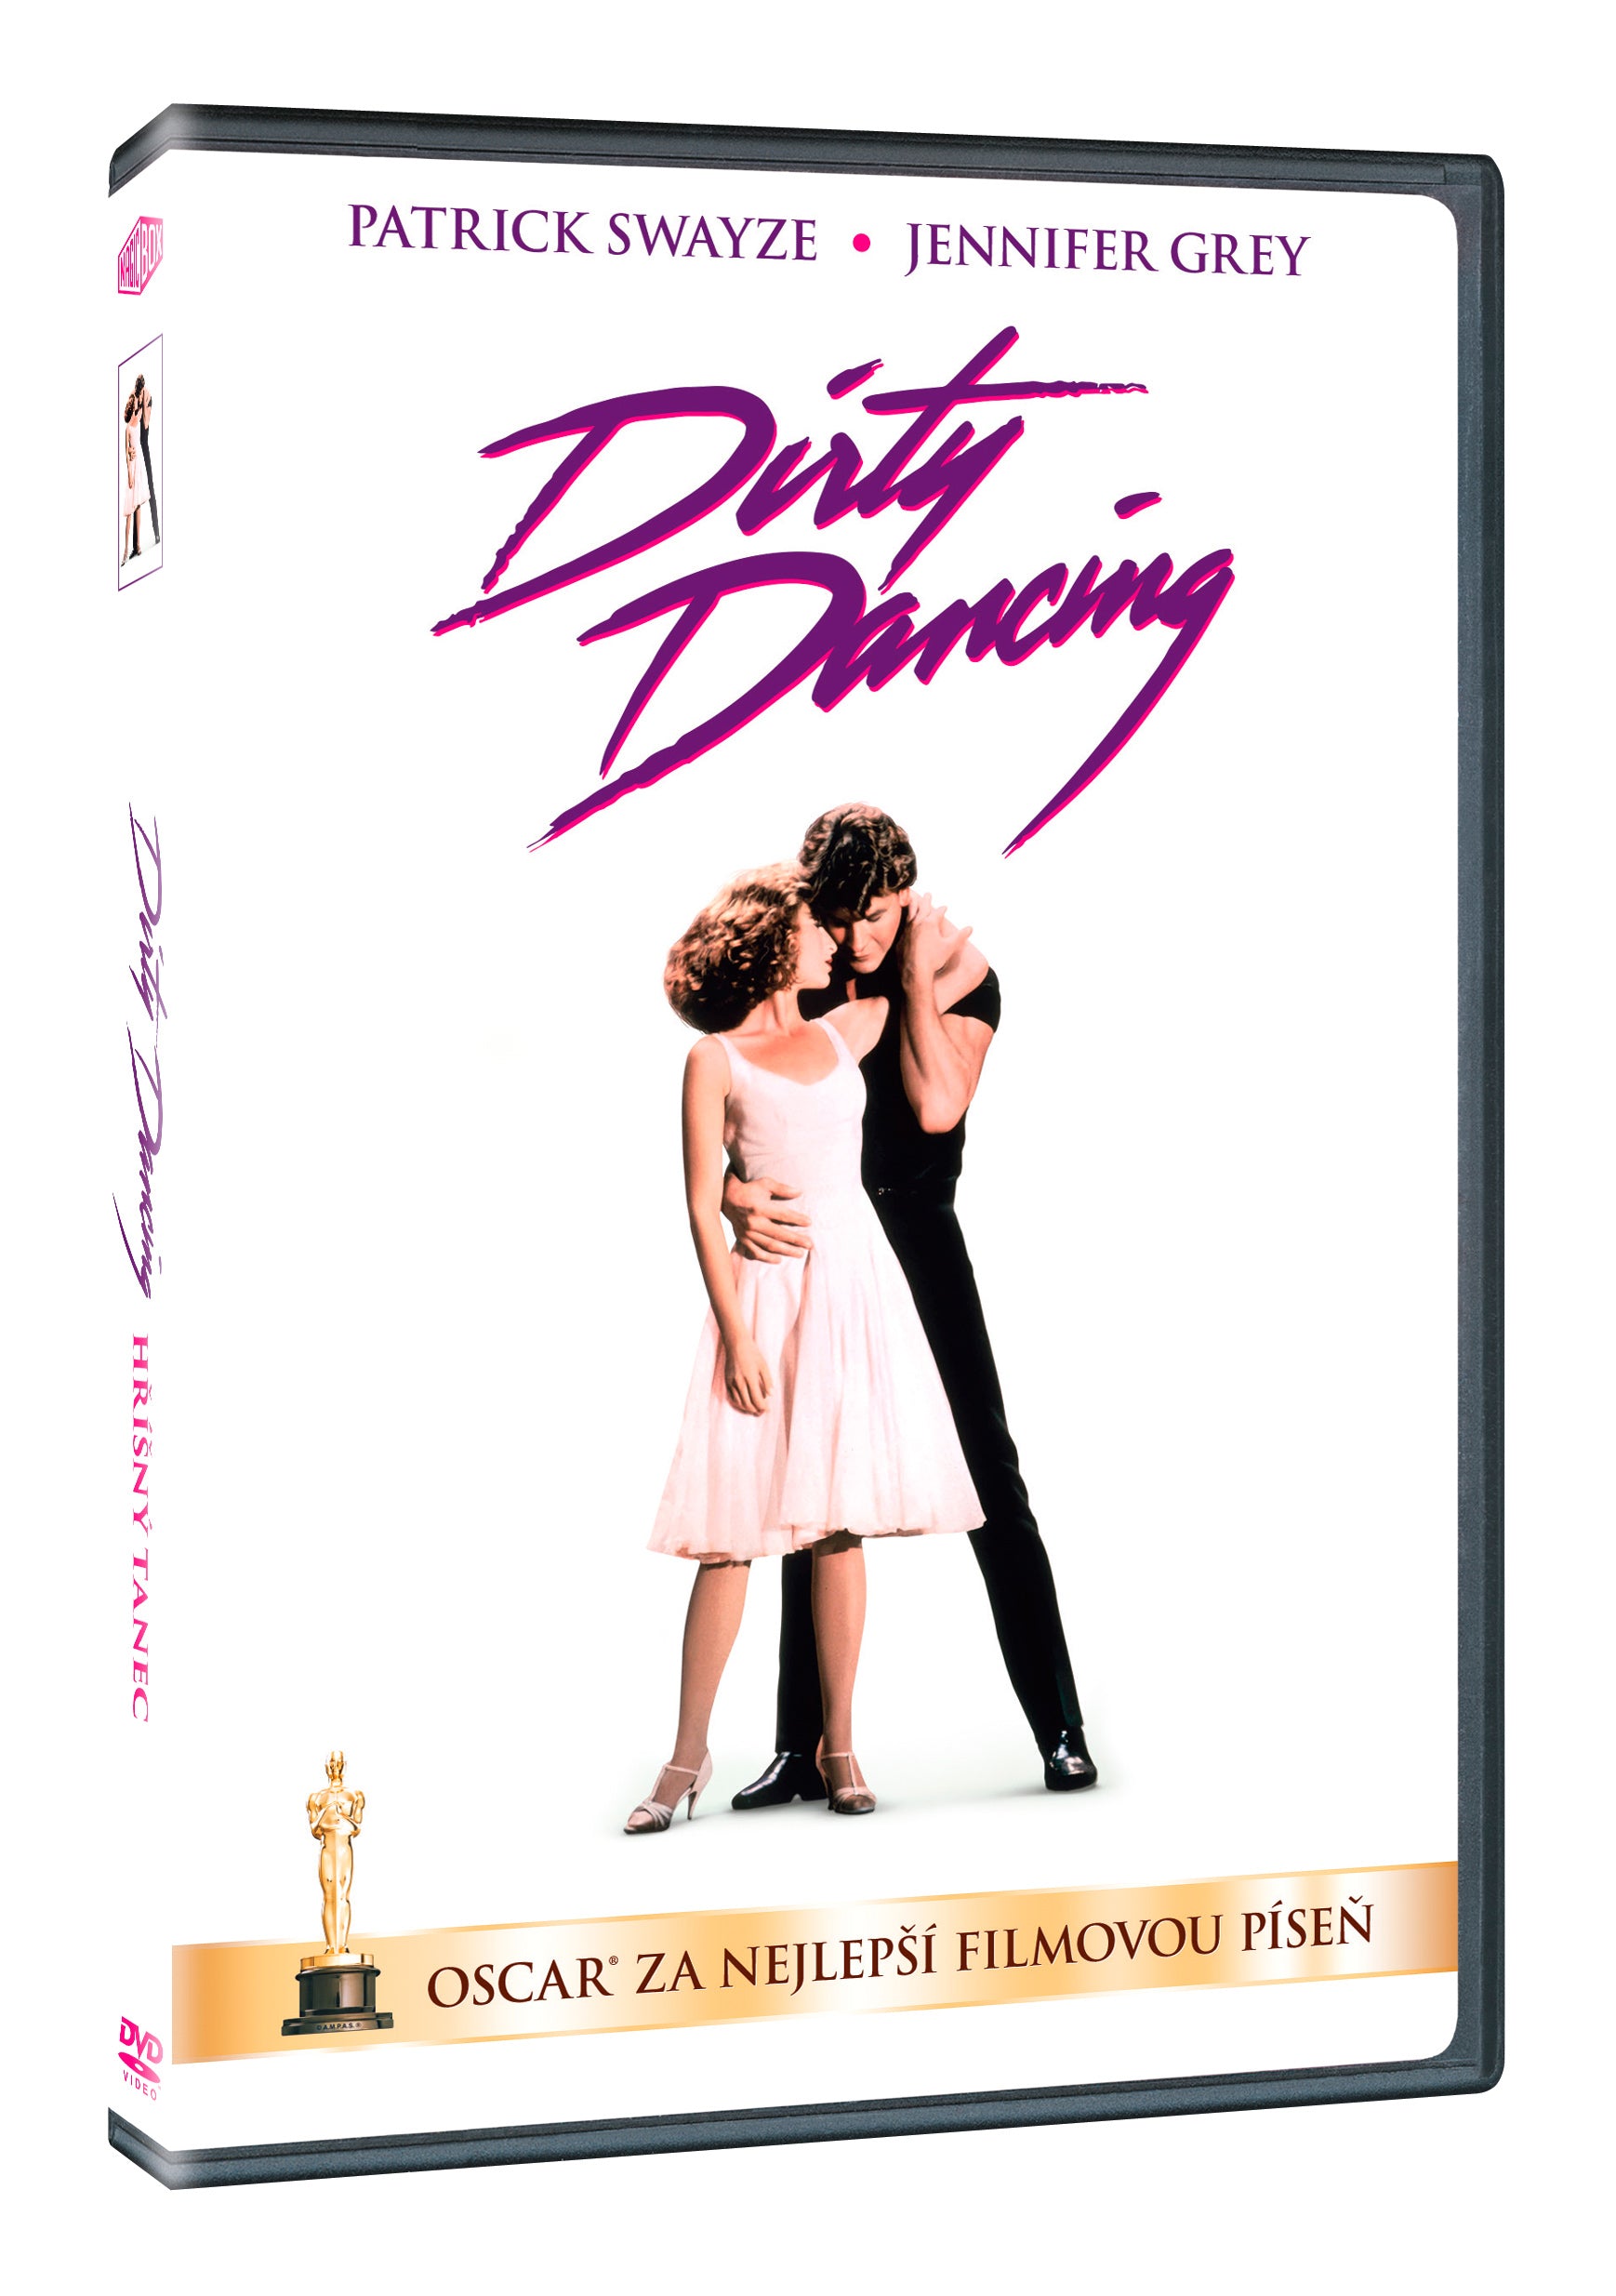 Hrisny tanec DVD / Dirty Dancing